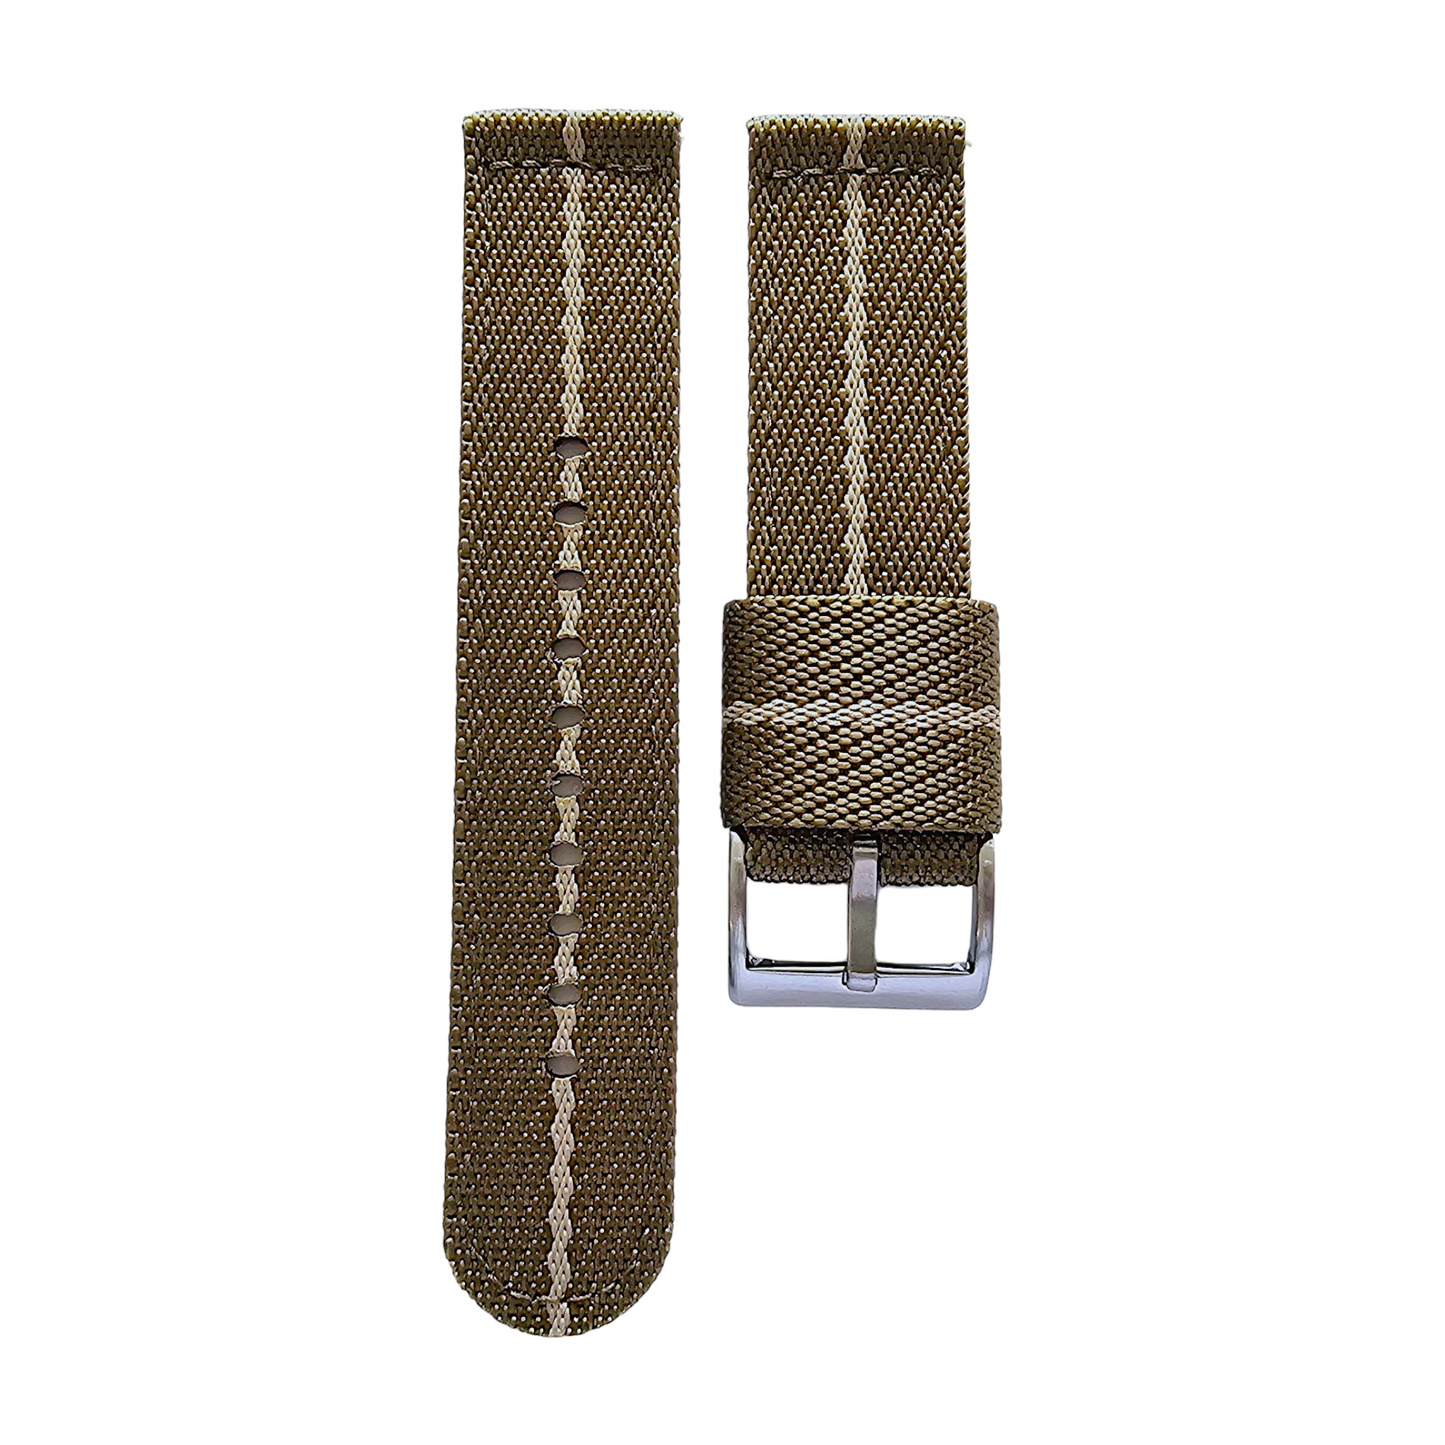 Two Piece NATO Nylon Watch Strap Band Premium G10 MOD Military Mens 20mm 22mm UK